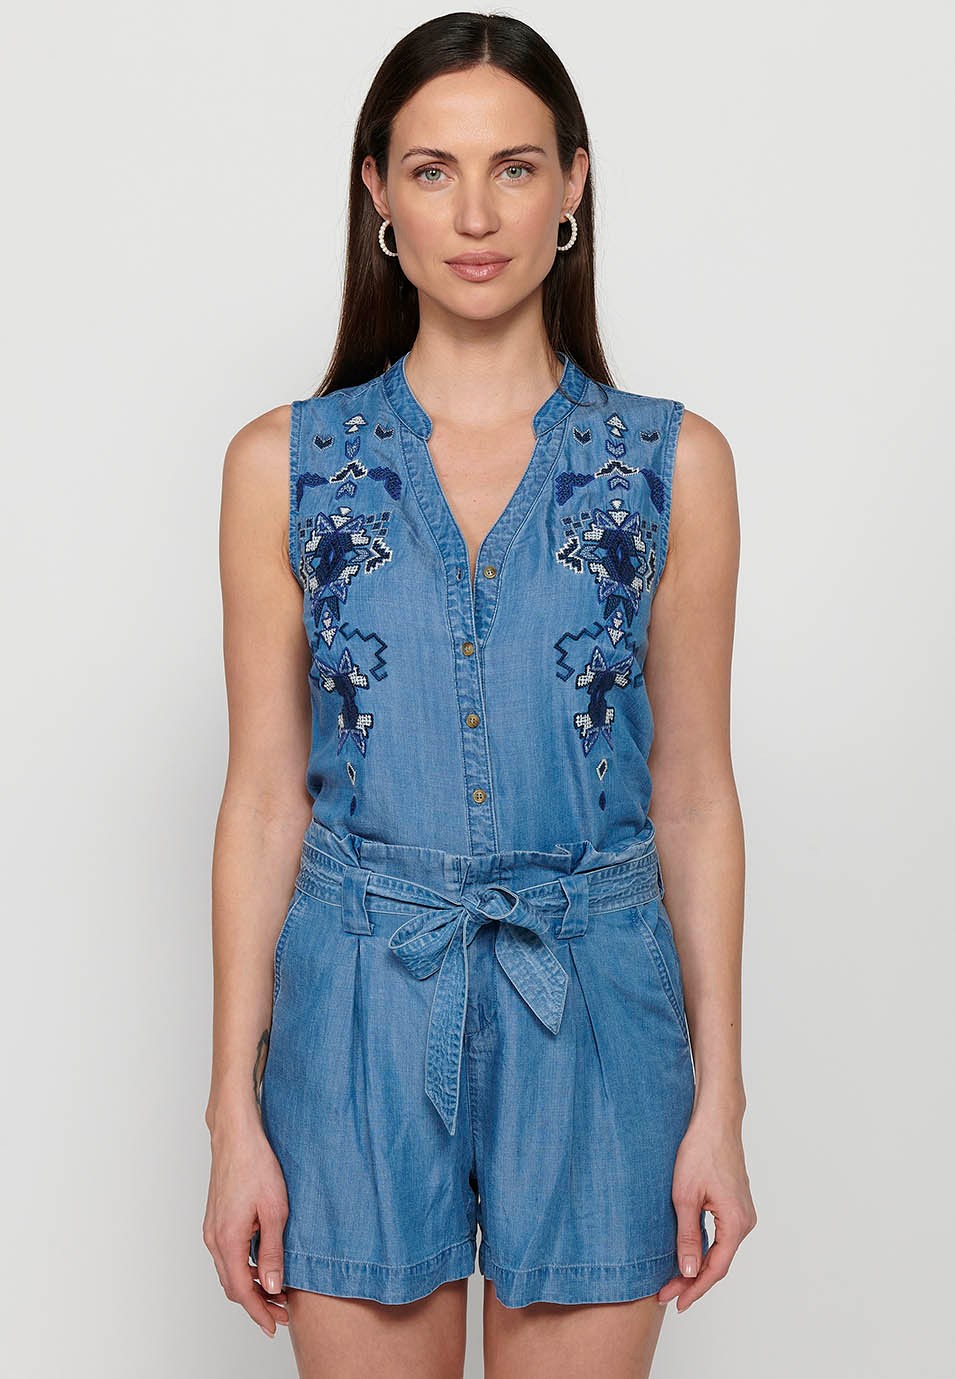 Sleeveless shirt style blouse, blue color for women